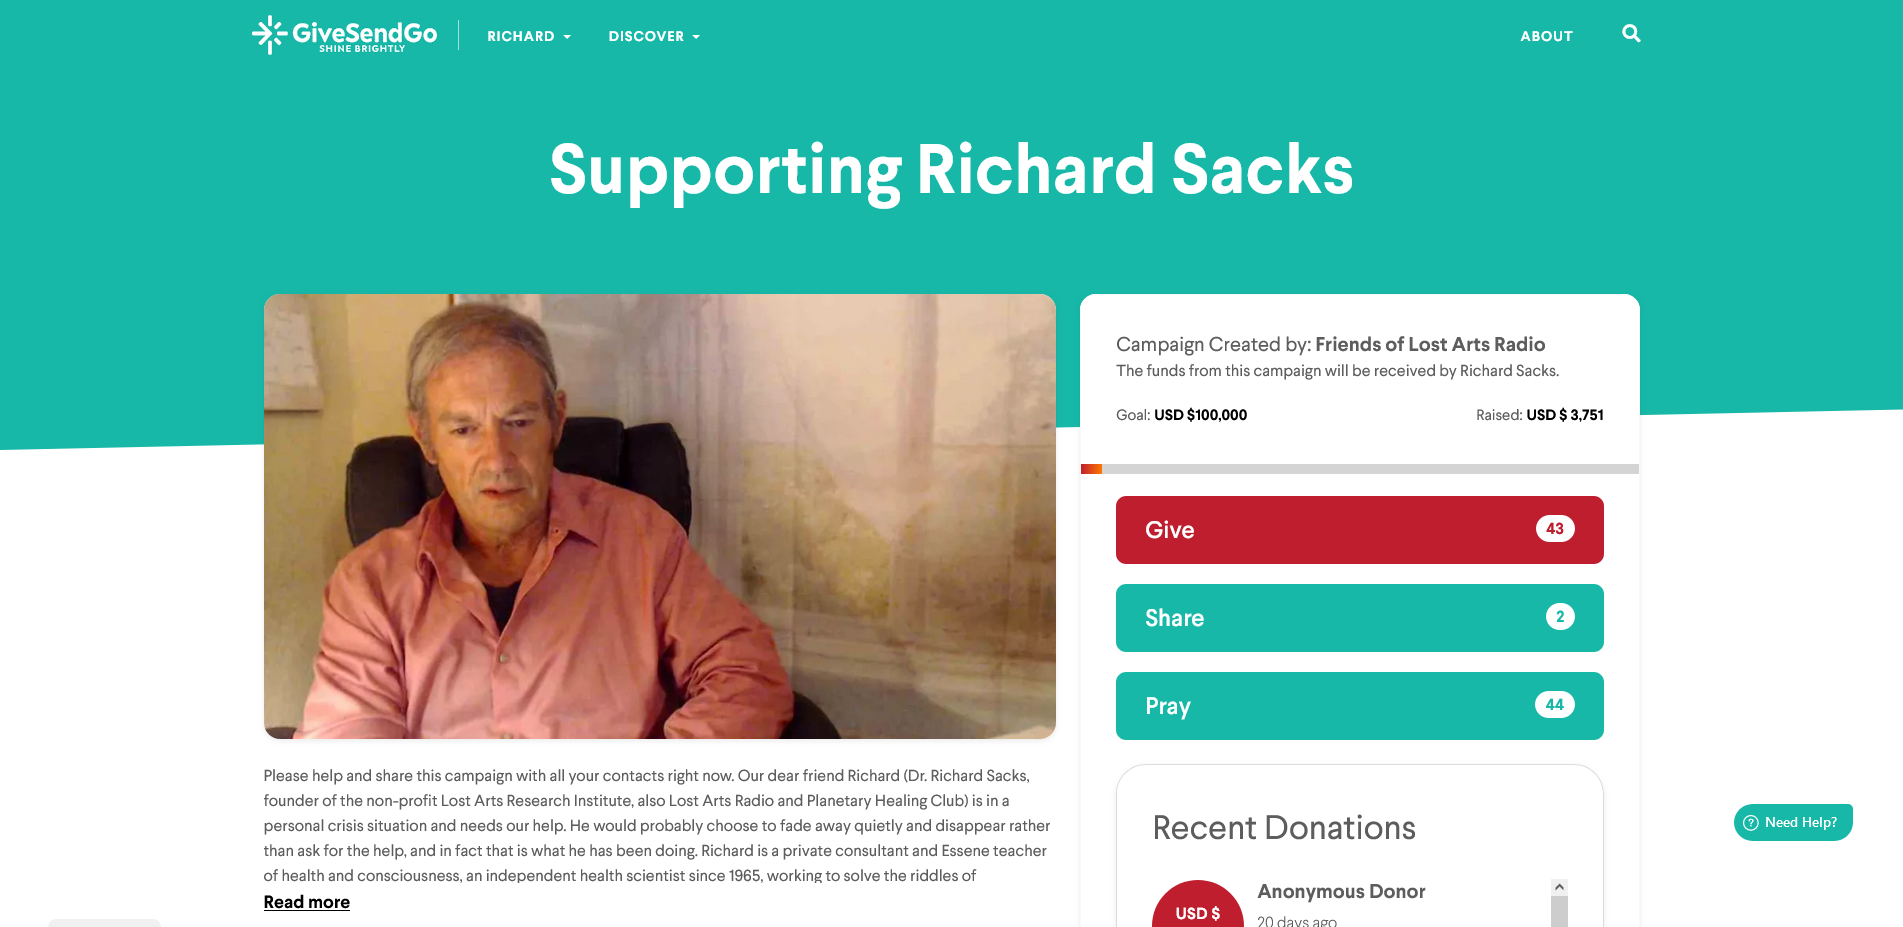 GiveSendGo for Richard Sacks